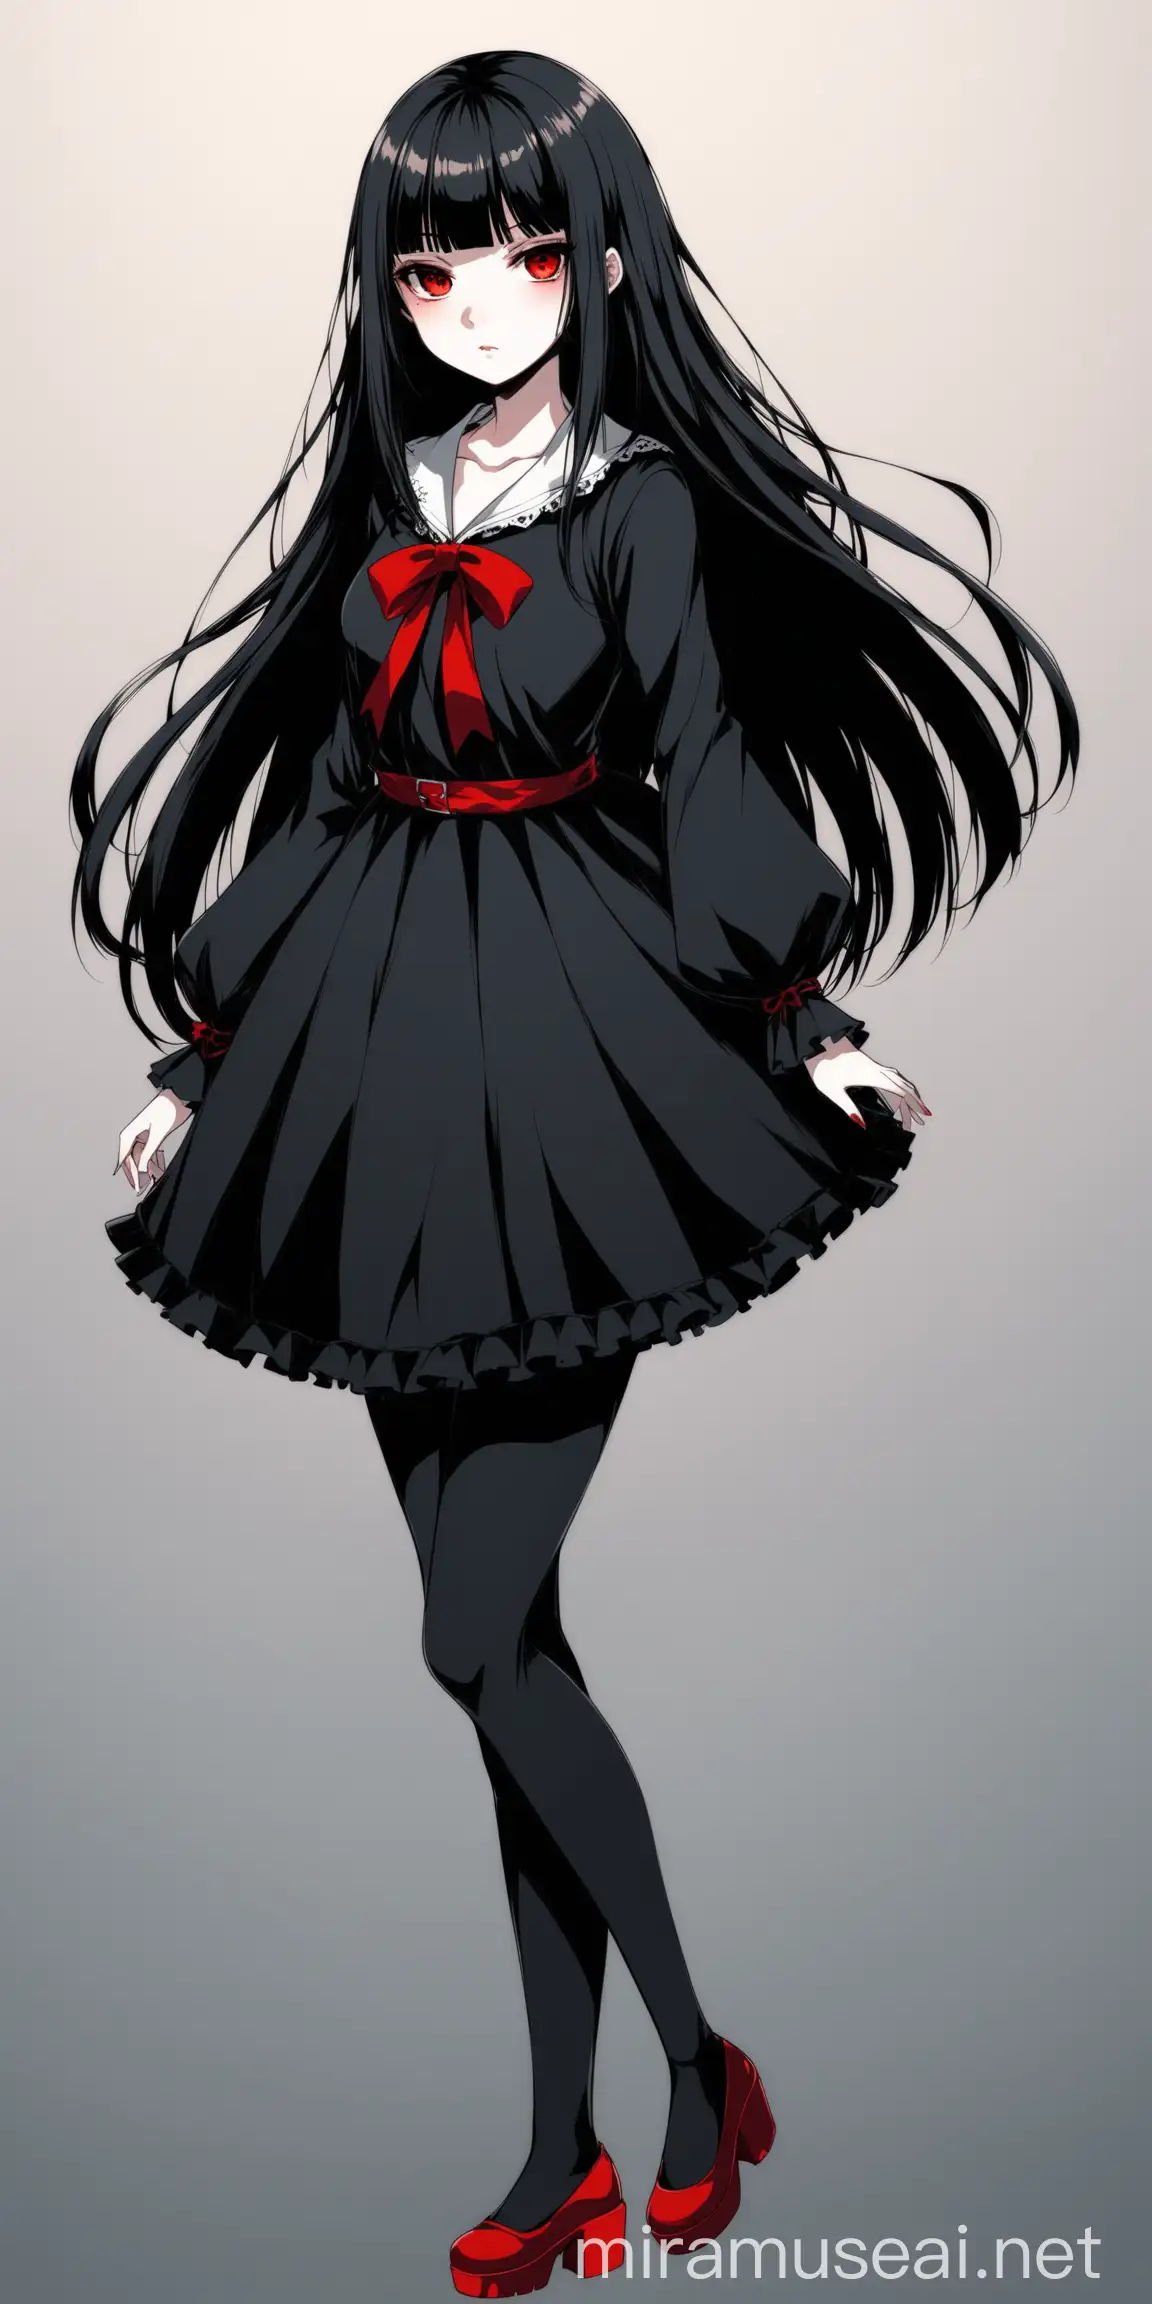 anime girl. female doll that ghostgirl possesses. Black hair with bangs, red eyes. full body in view. ANIME style